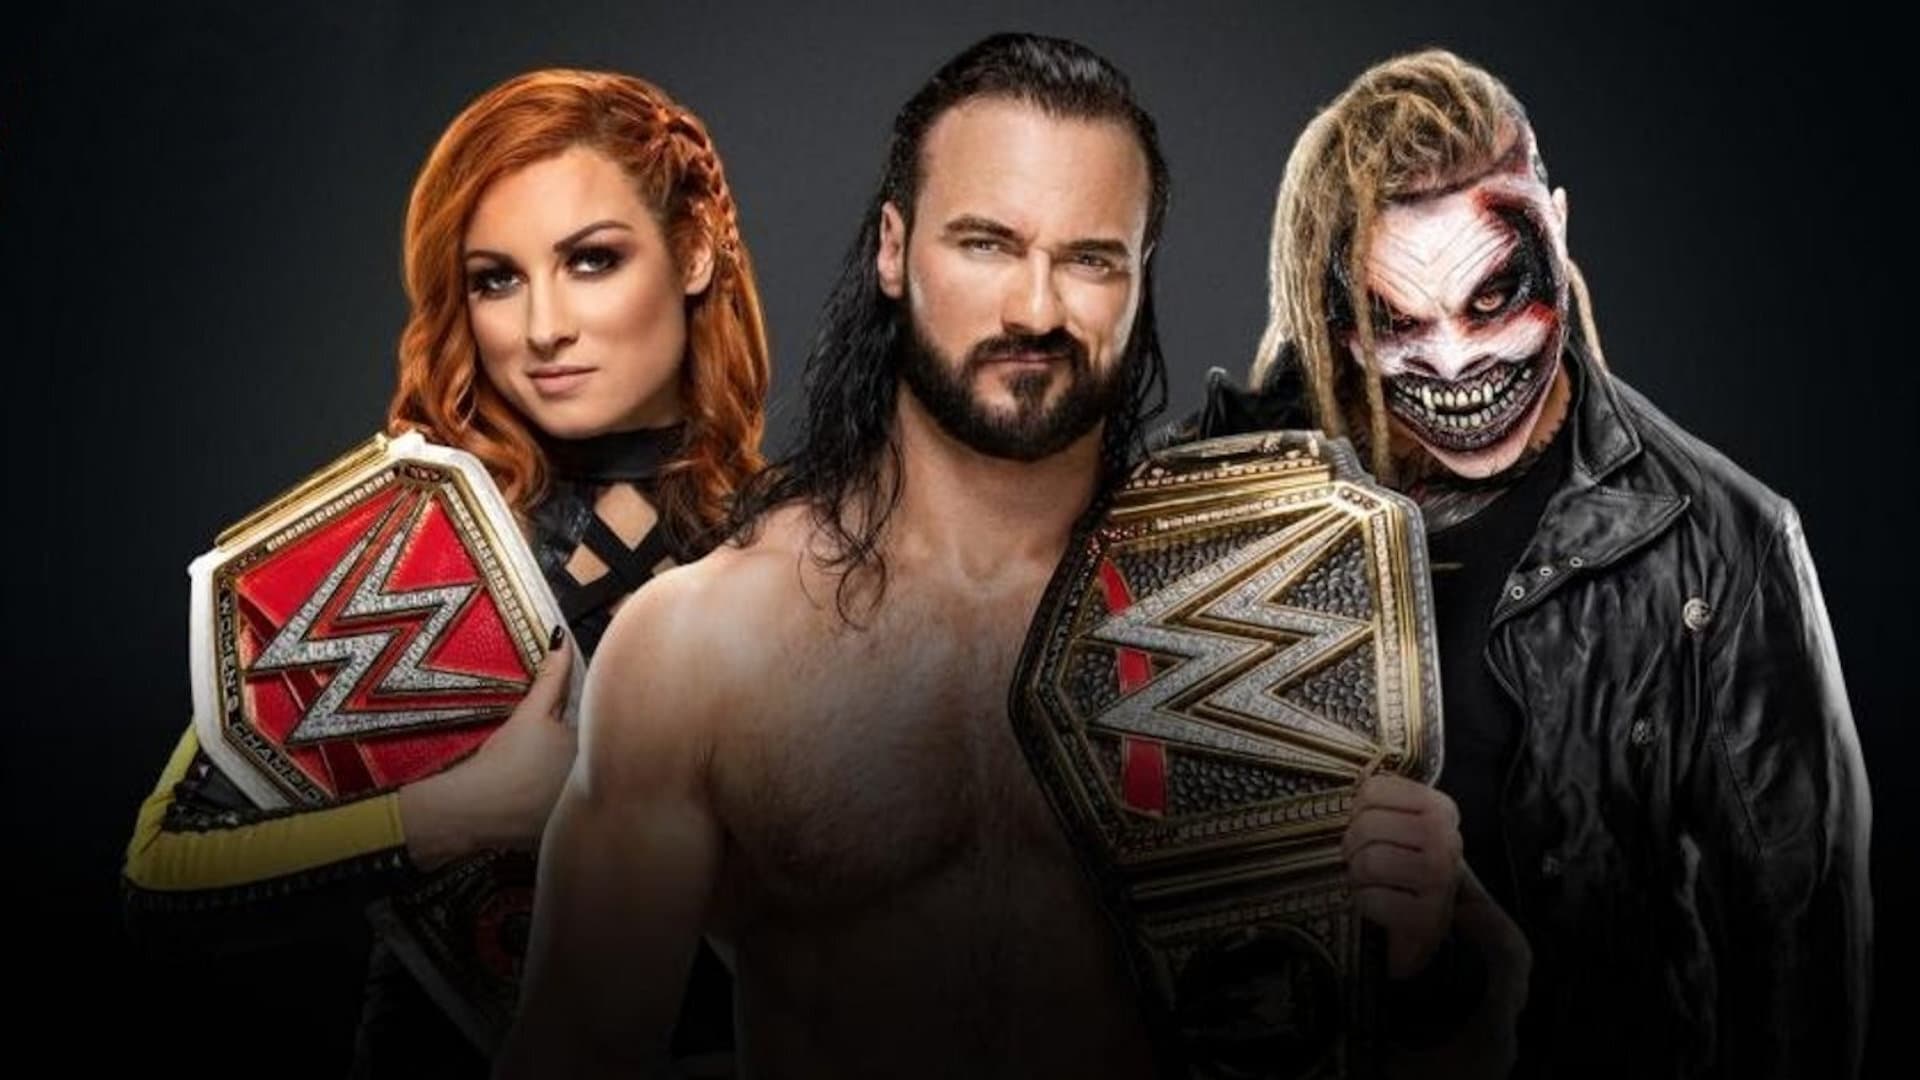 WWE WrestleMania 36: Part 1 2020 123movies